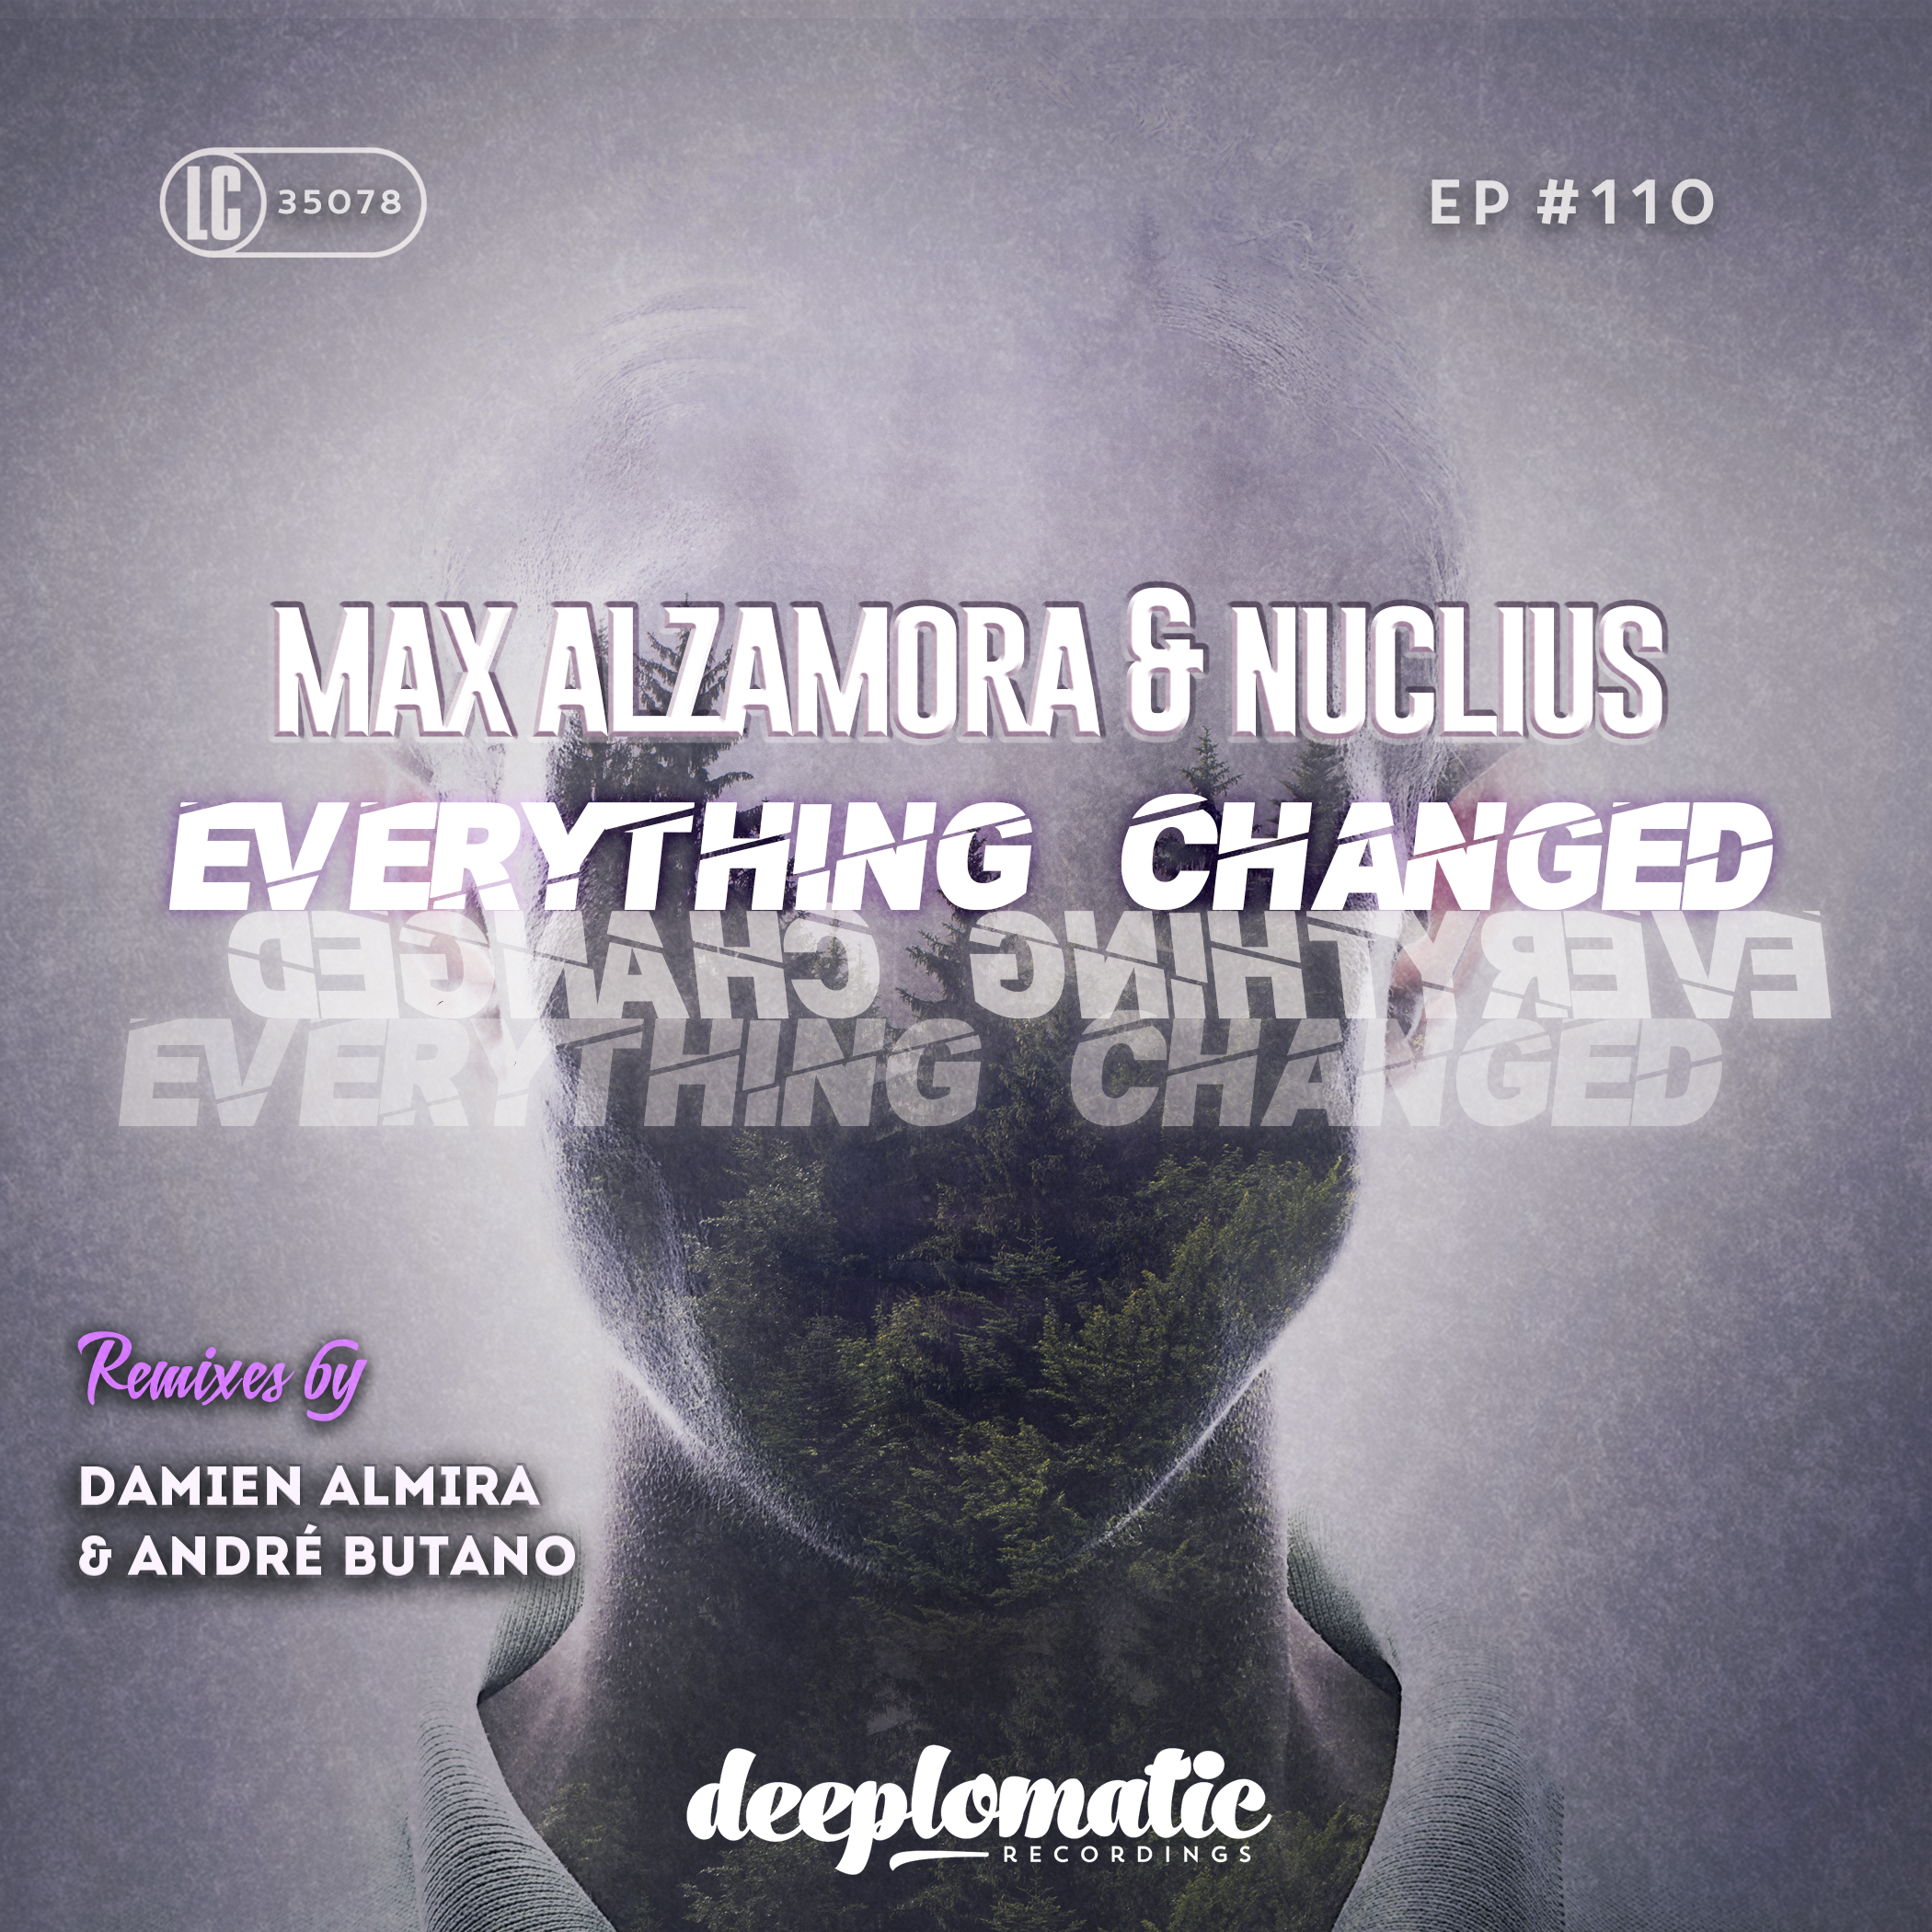 Everything Changed - Max Alzamora & Nuclius